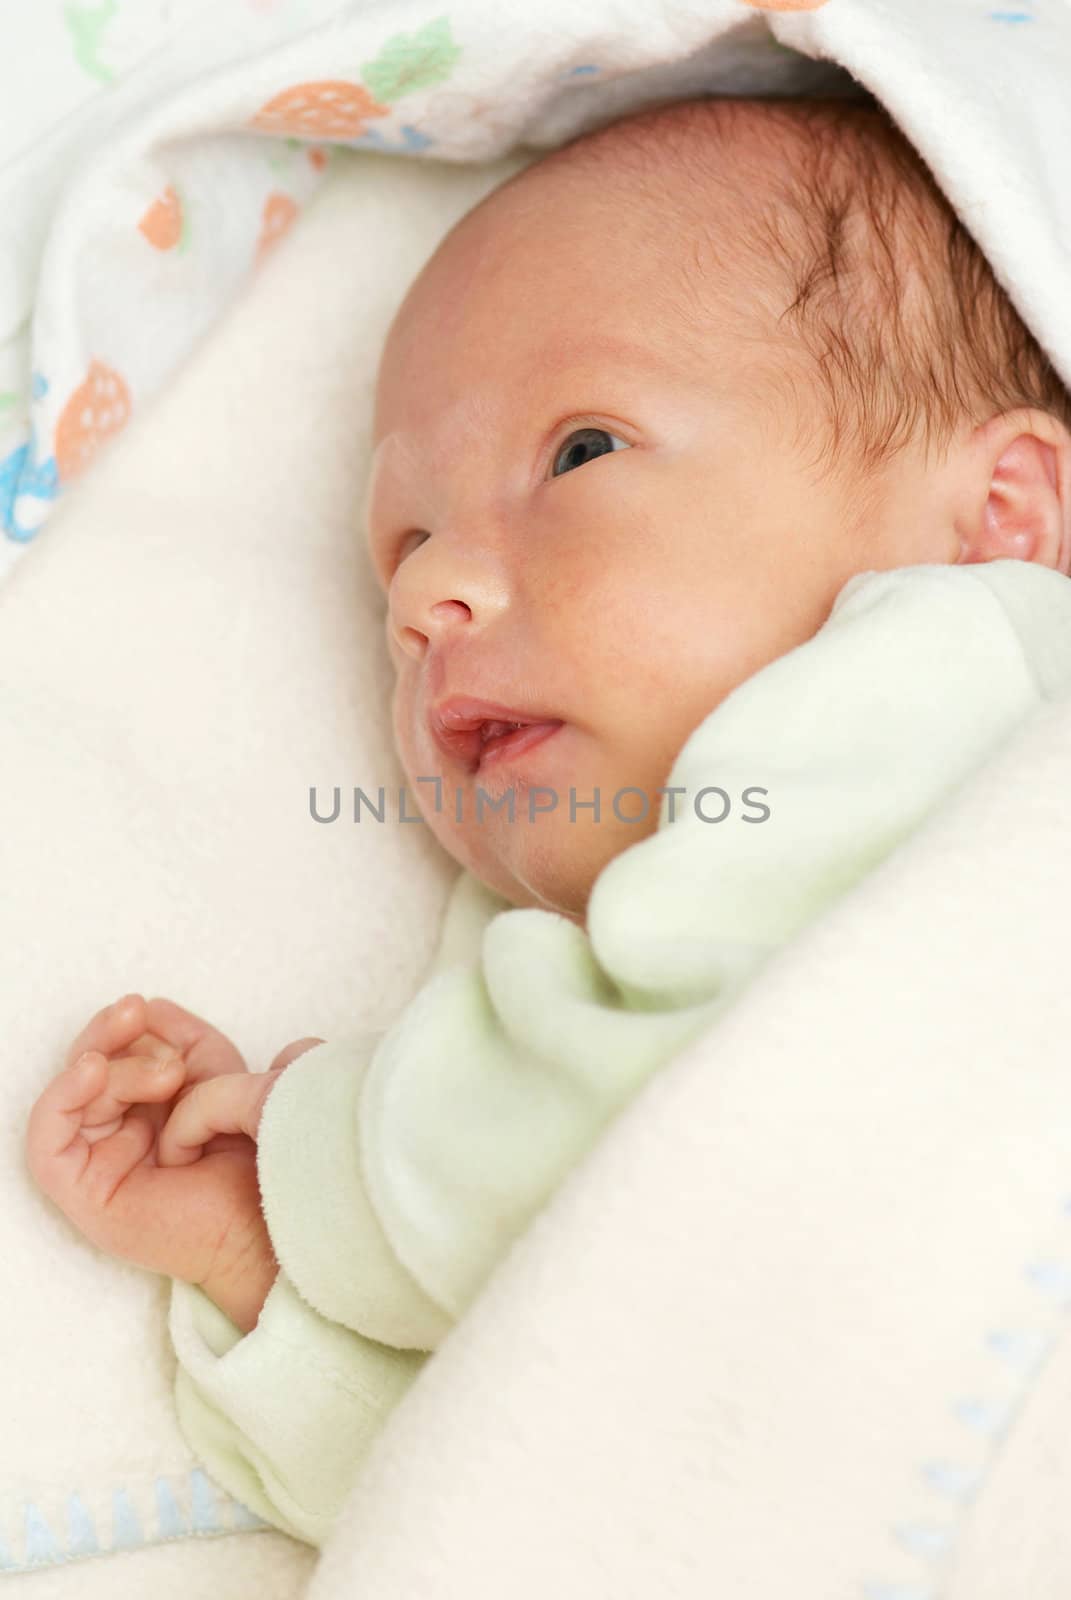 Portrait of a newborn baby by Olinkau